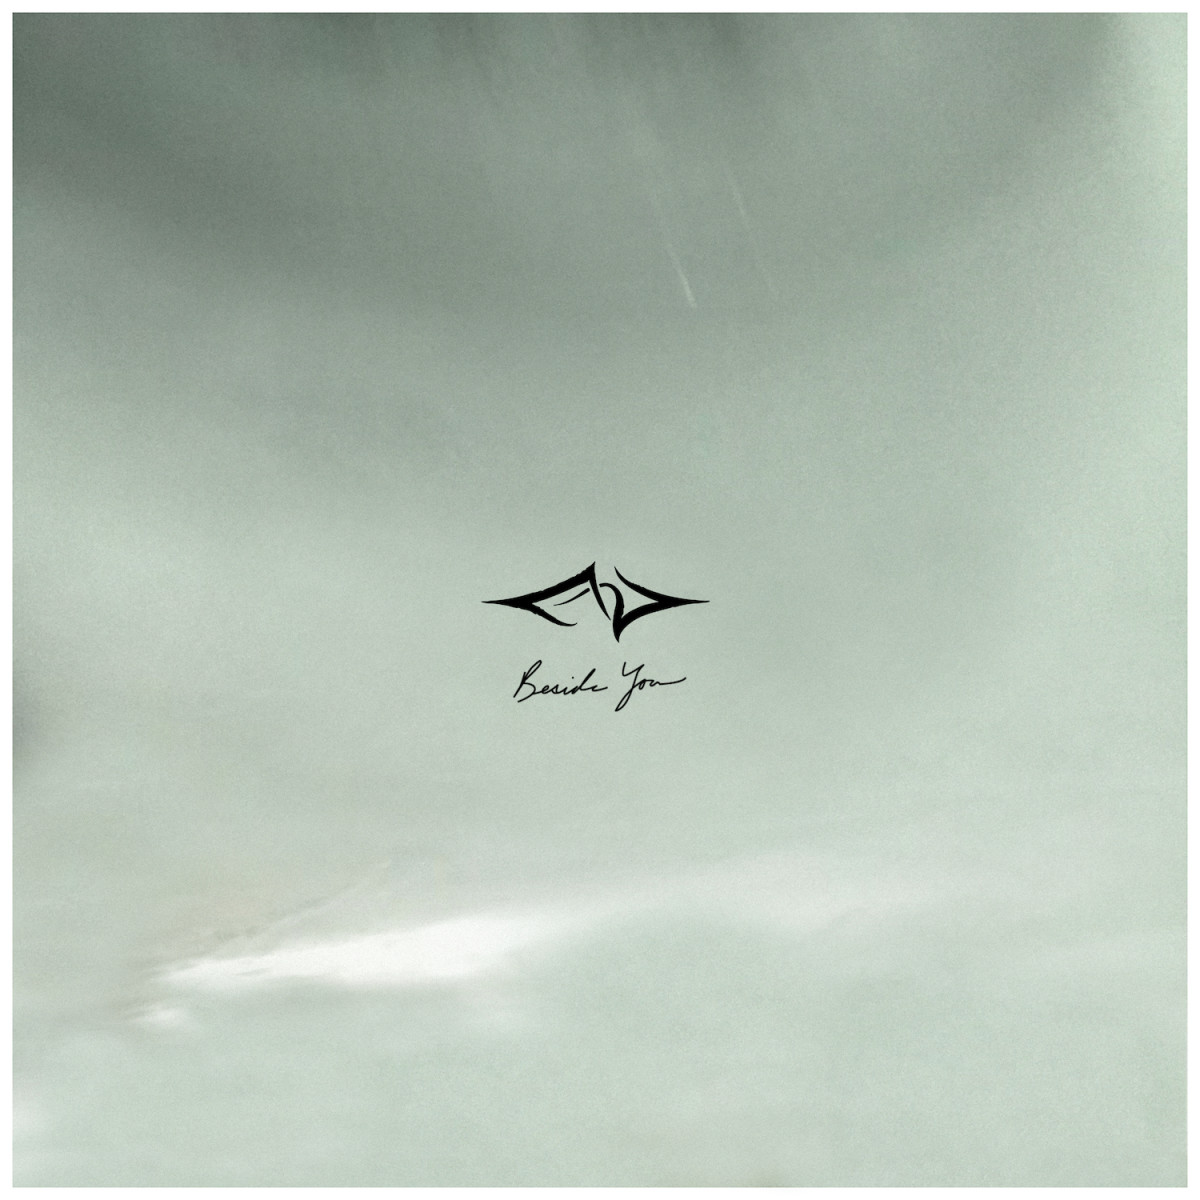 Phelian - Beside You (Album Cover) 1500x1500